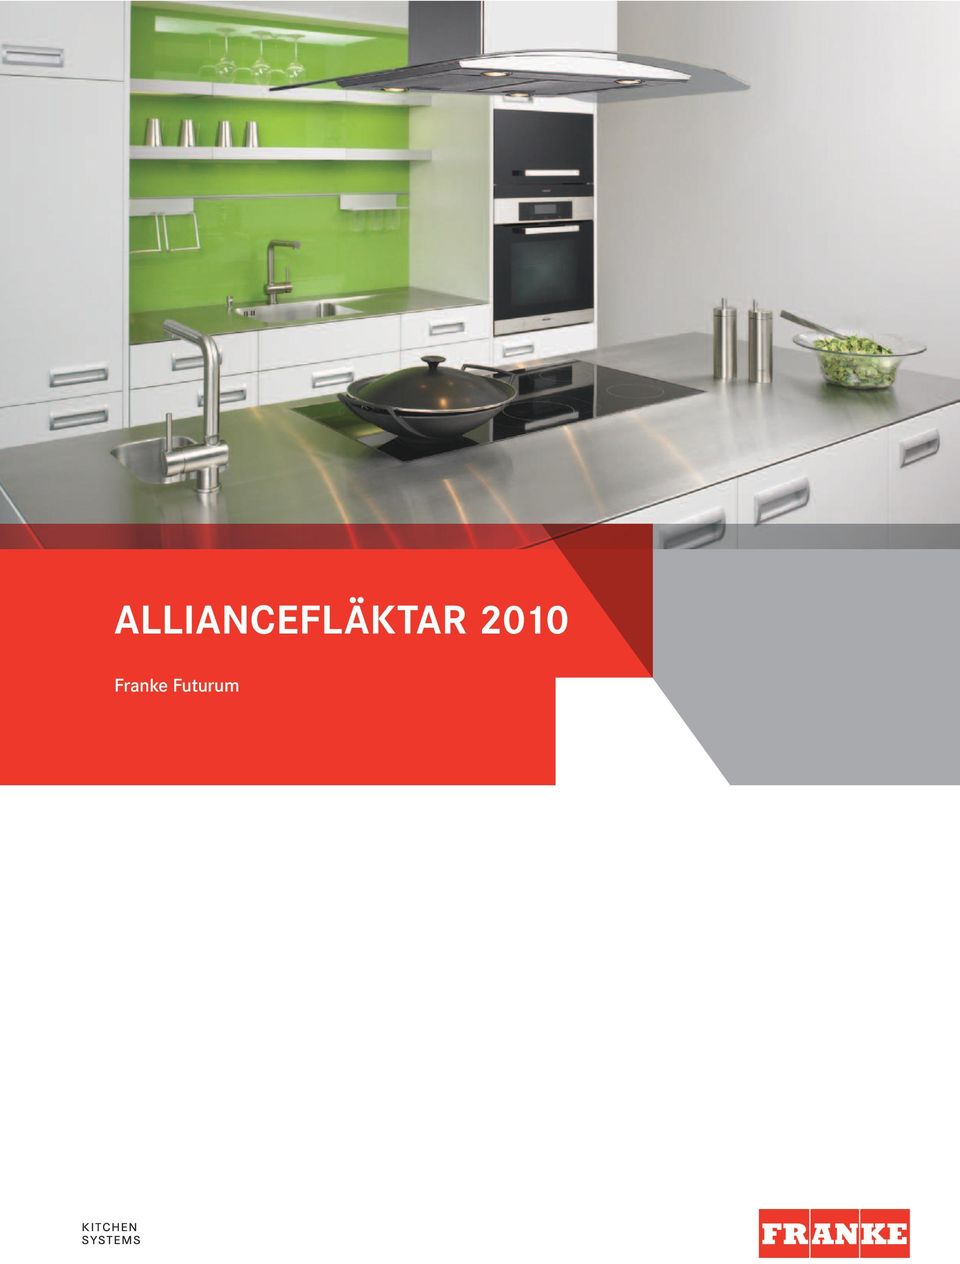 Alliancefläktar Franke Futurum - PDF Free Download